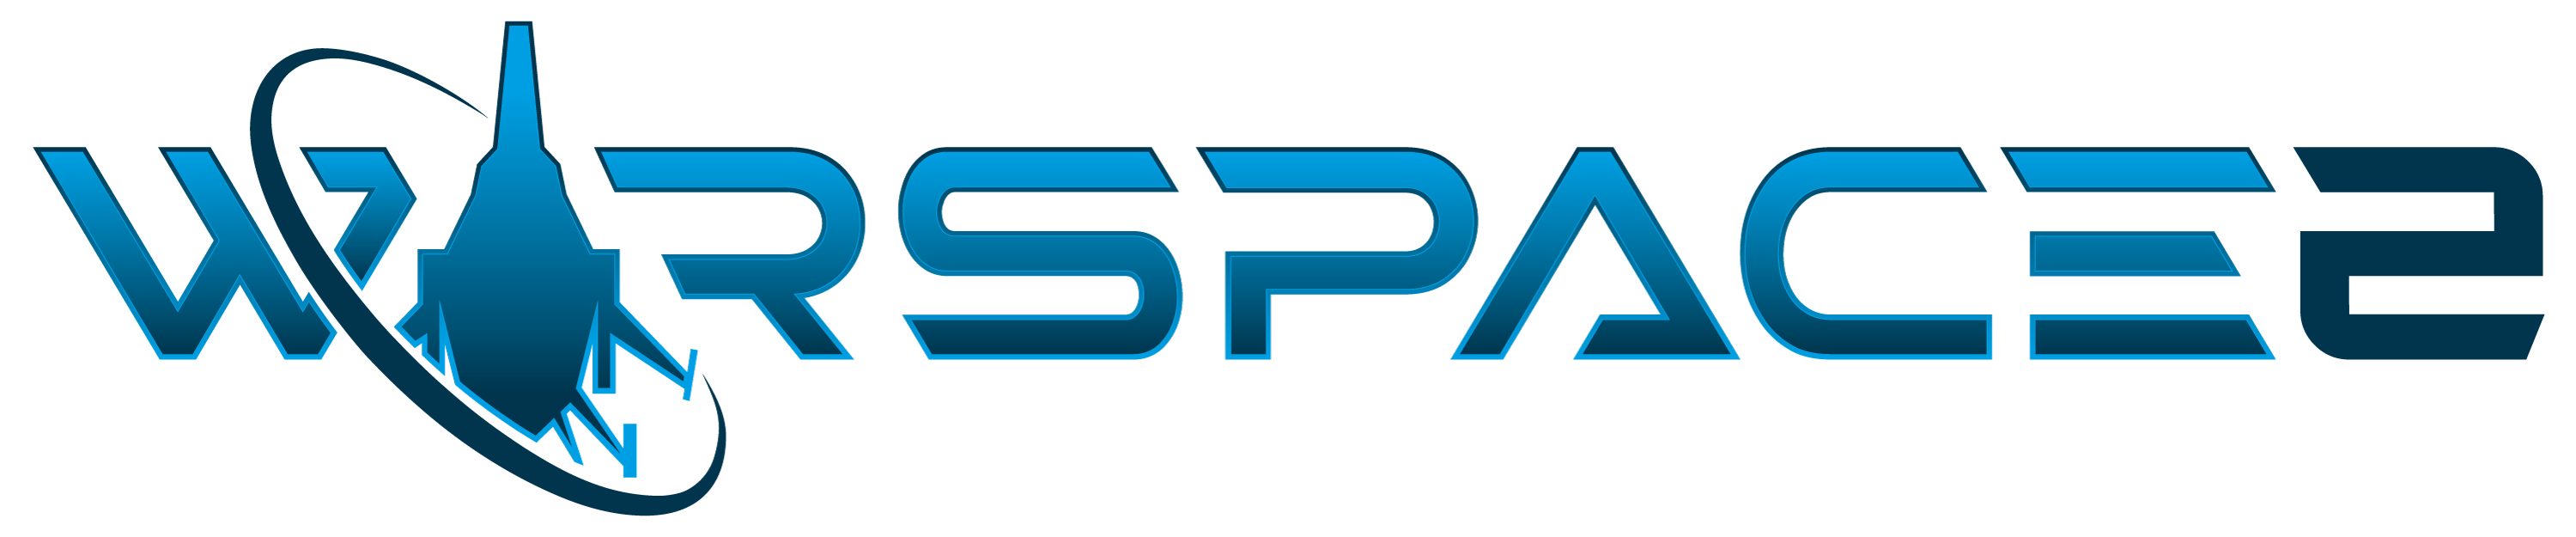 Warspace 2 Logo Text